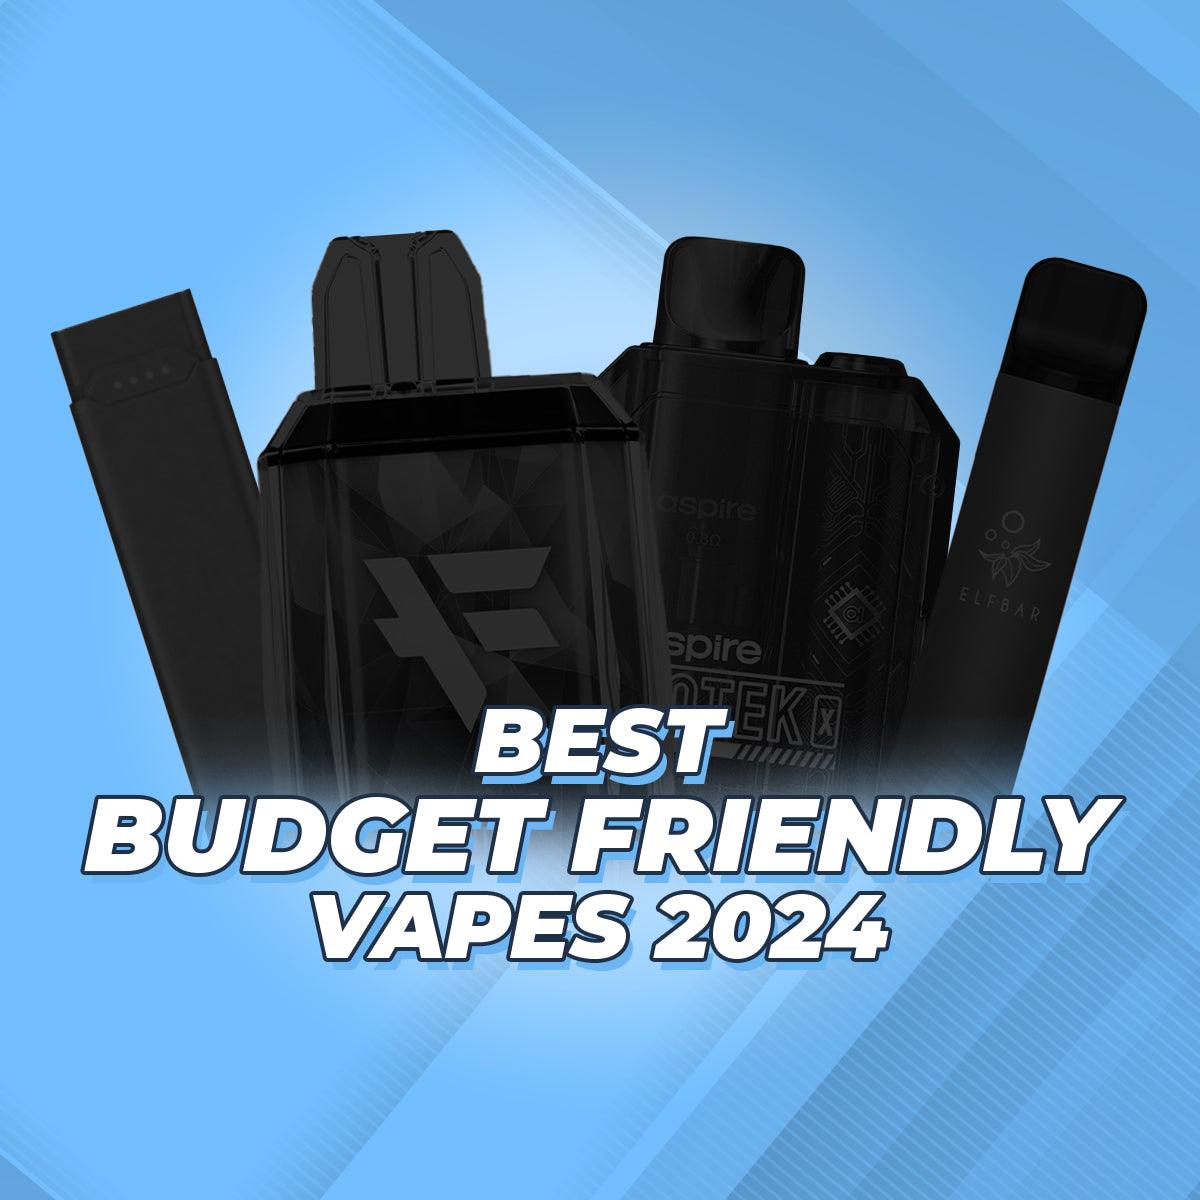 Top 10 Budget Friendly Vapes 2024